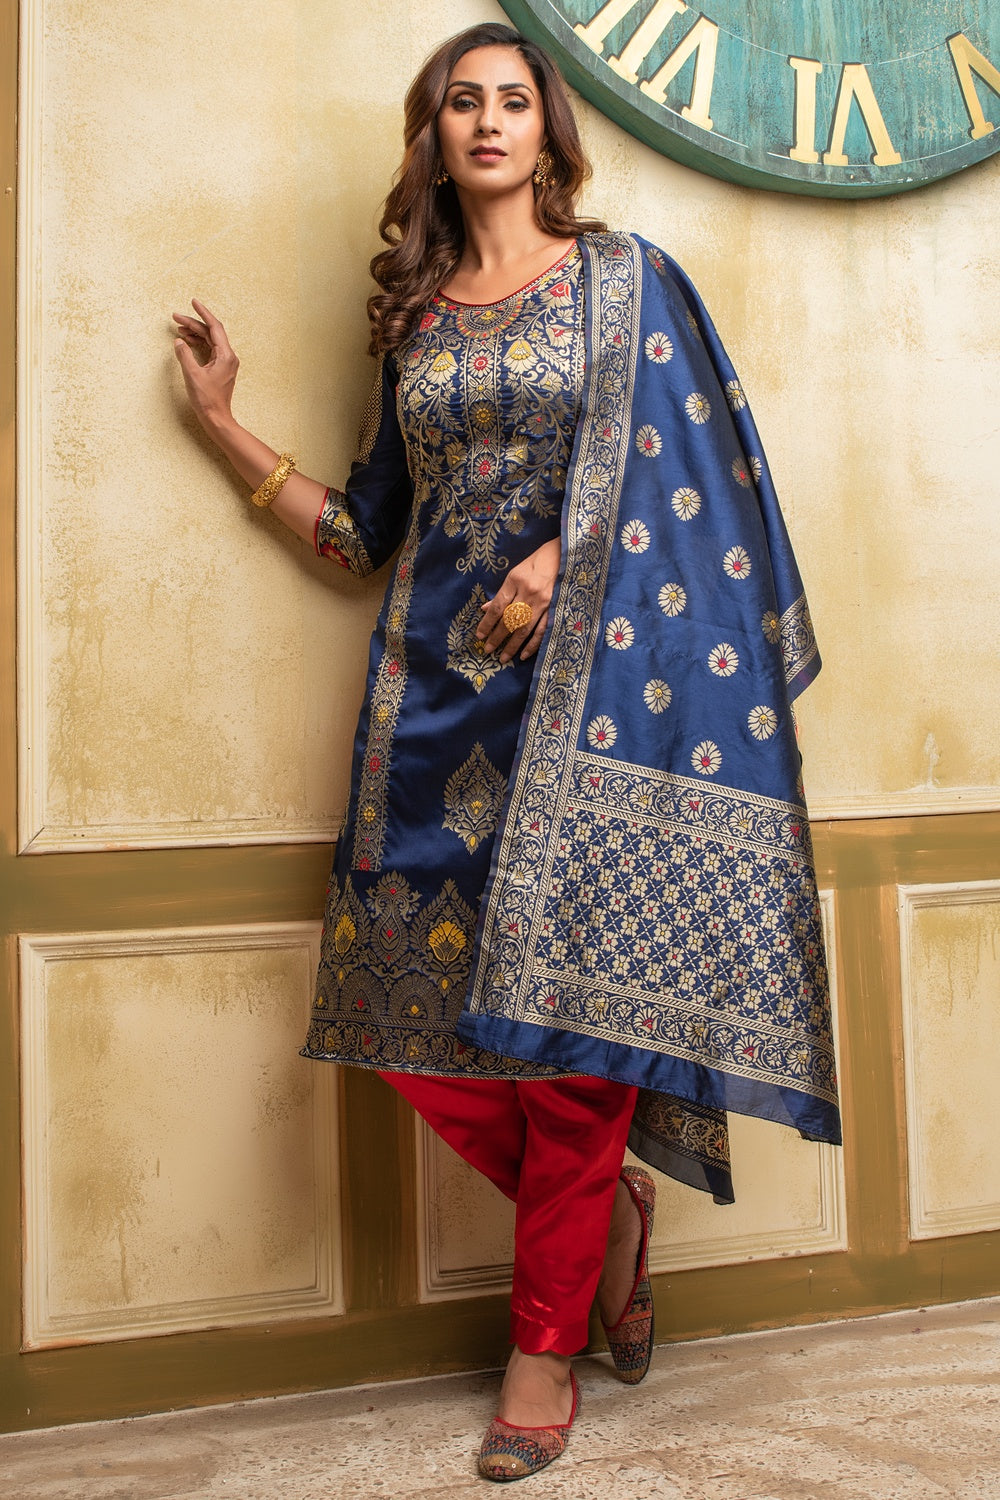 Buy 8824 Indian Latest Dark Blue Art Silk Suit Patiyal Salwar Kameez  Punjabi Party Wedding Cocktail Wear Ethnic Women Girls Semi Stitched at  Amazon.in